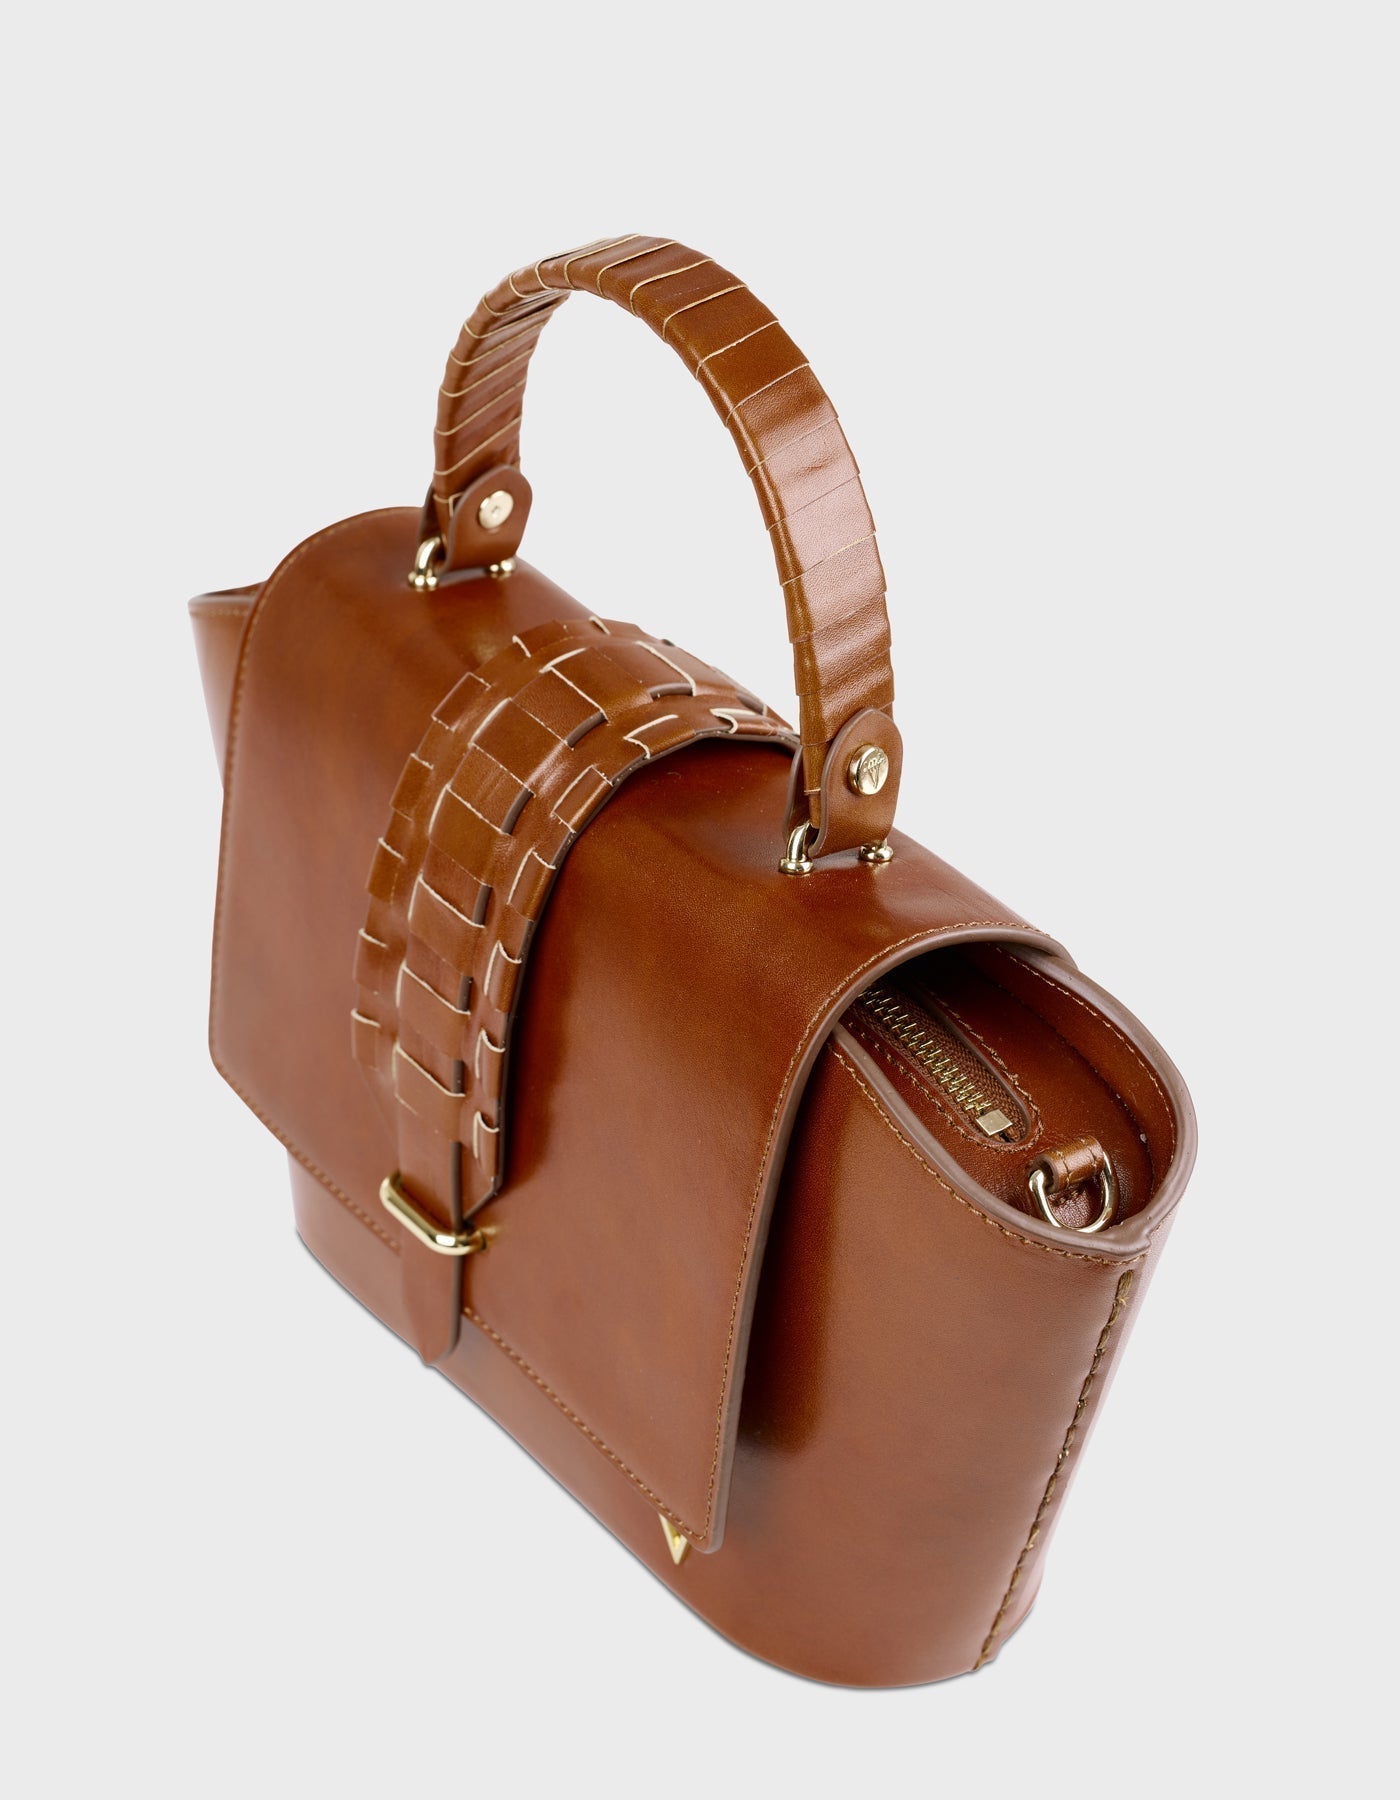 HiVa Atelier - Ventus Shoulder Bag Chocolate